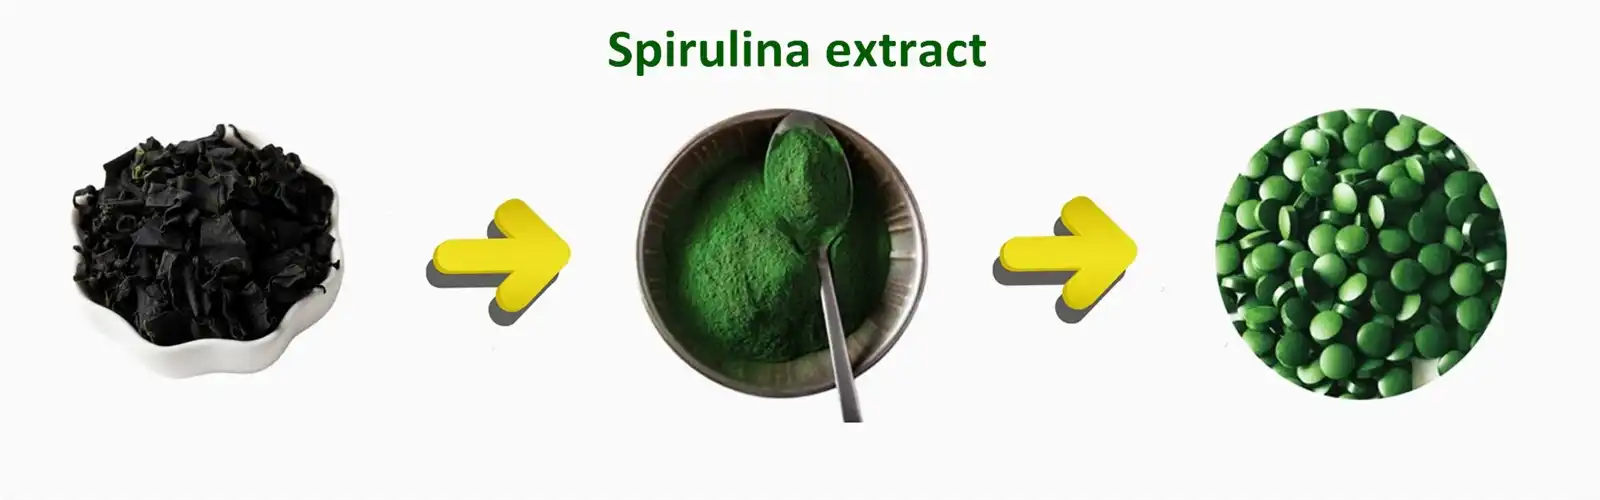 Spirulina Extract powder